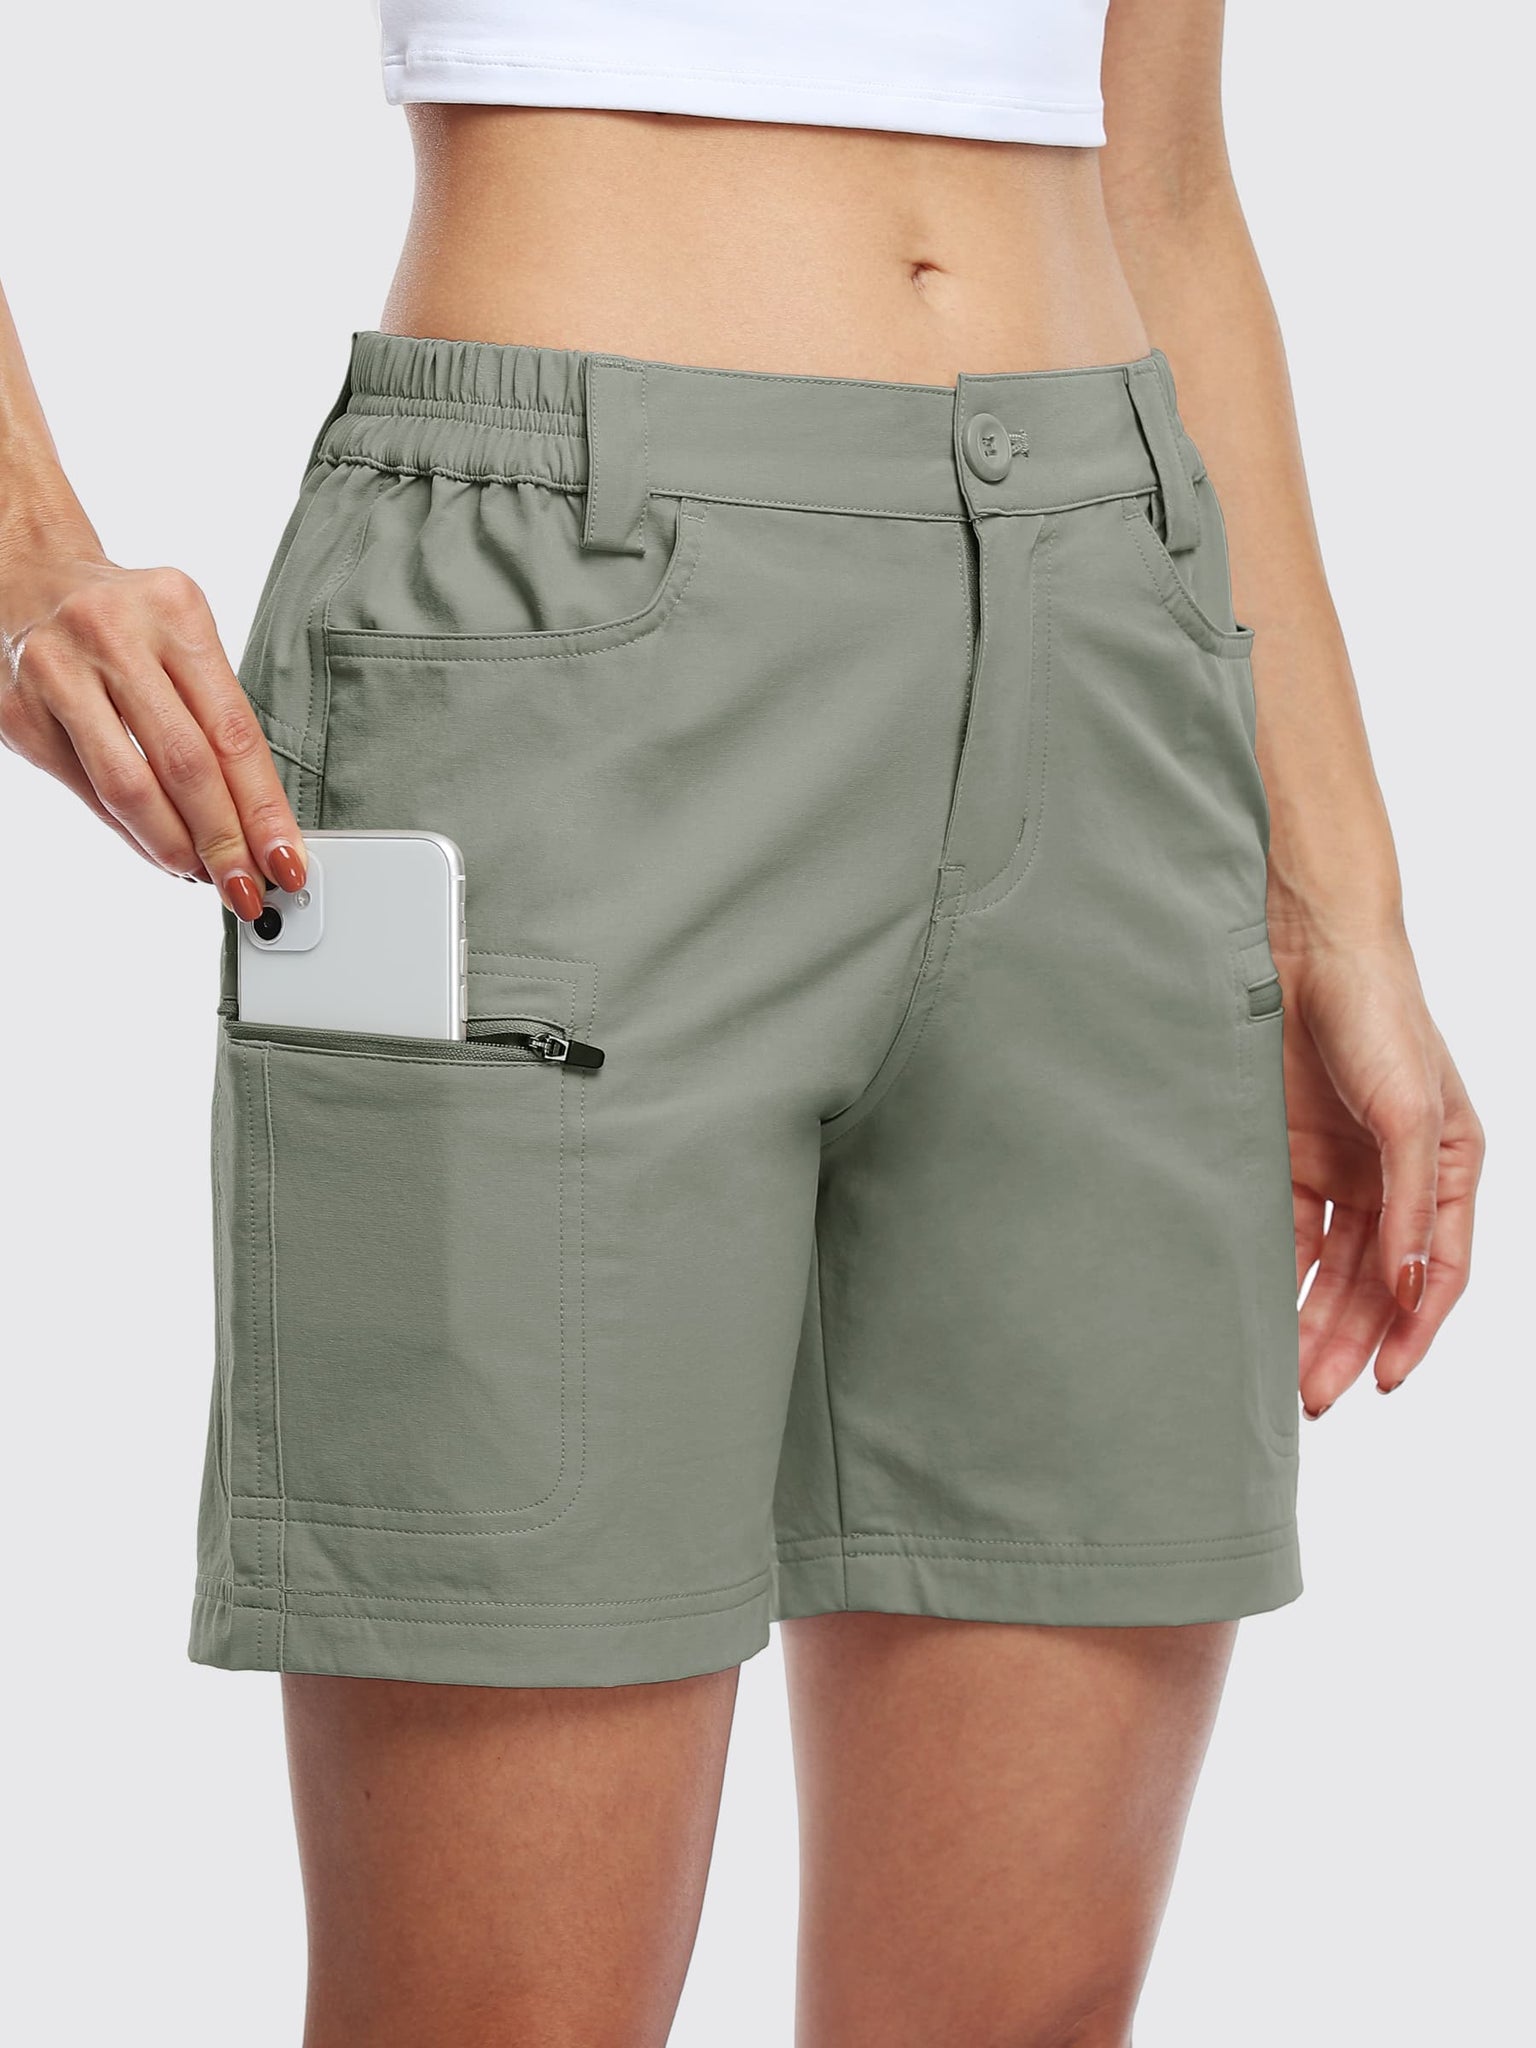 Willit Women's Outdoor Cargo Shorts 6 Inseam_Green_model3